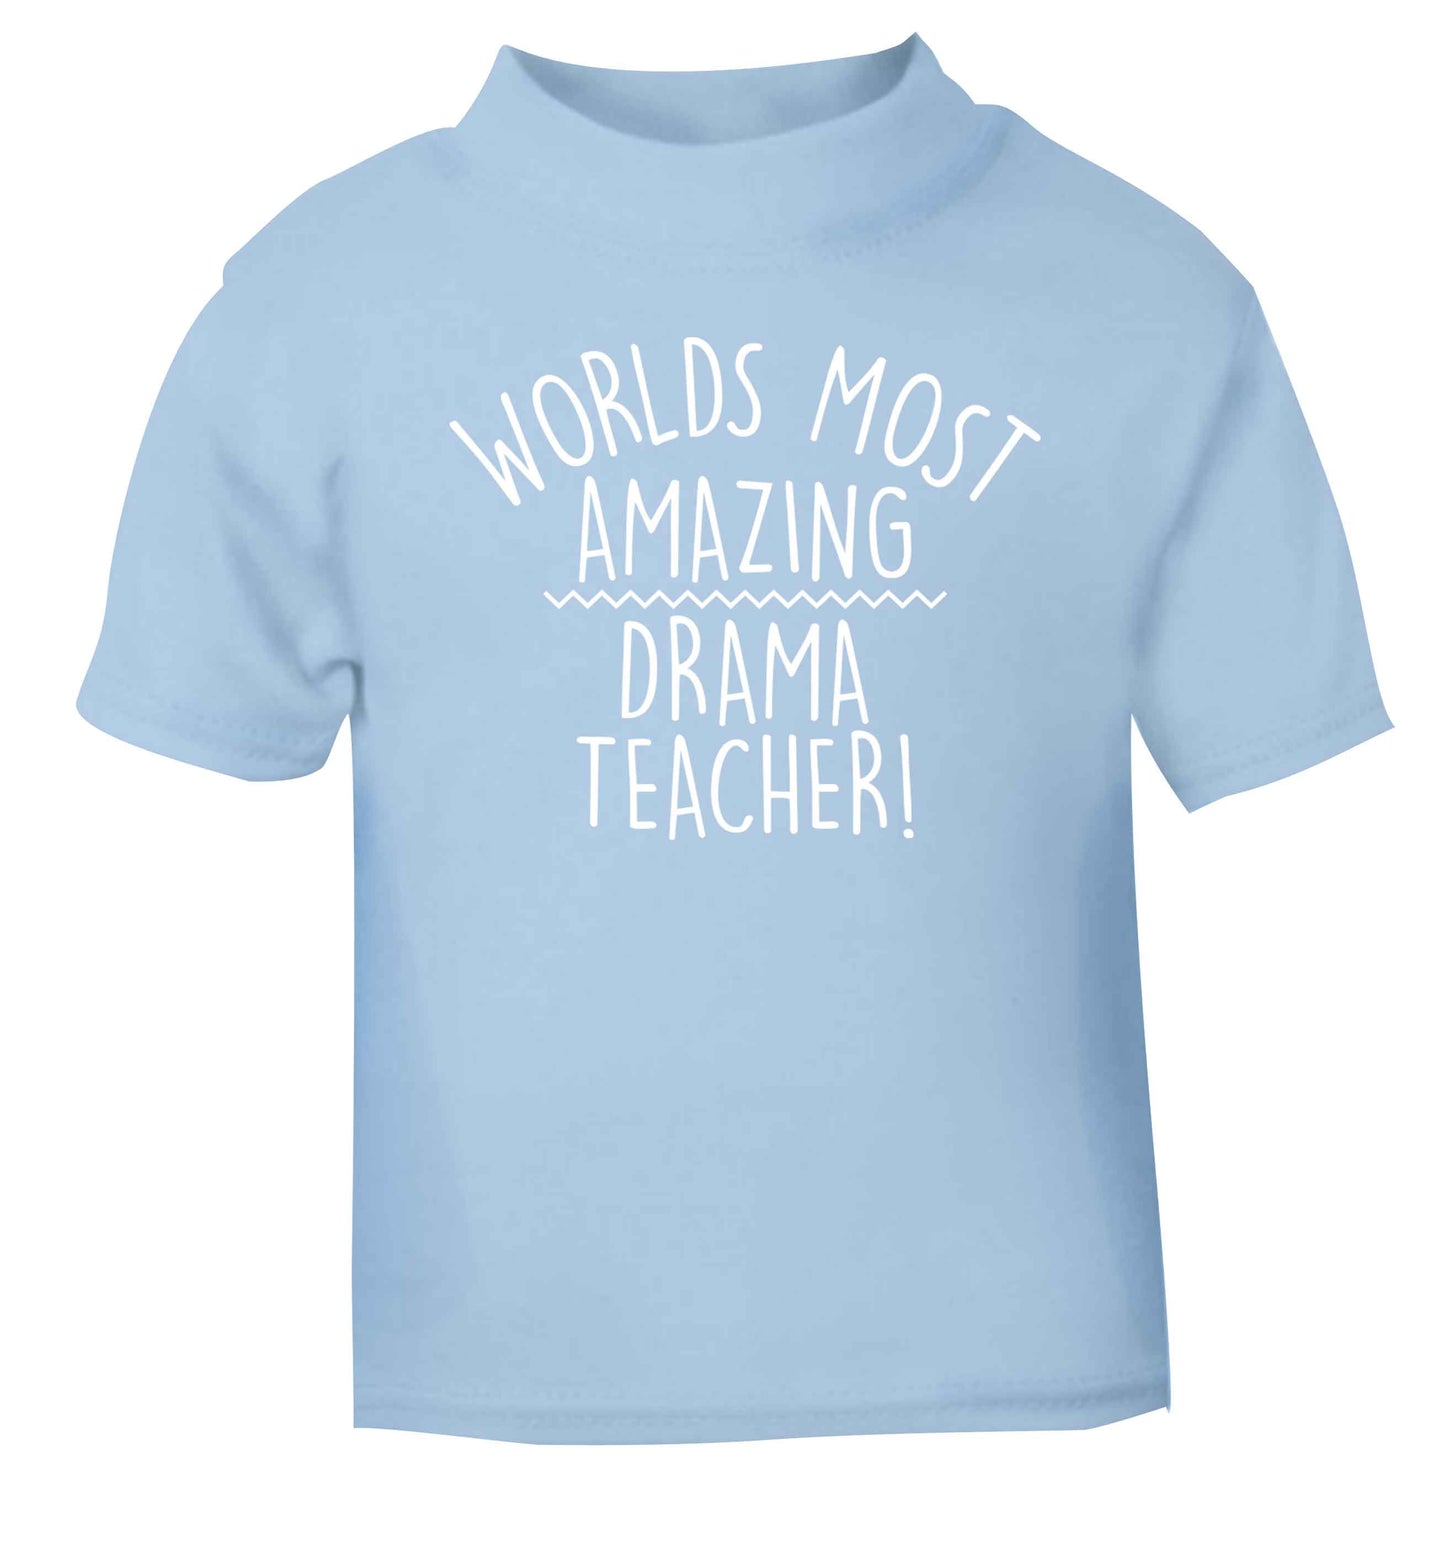 Worlds most amazing drama teacher light blue baby toddler Tshirt 2 Years